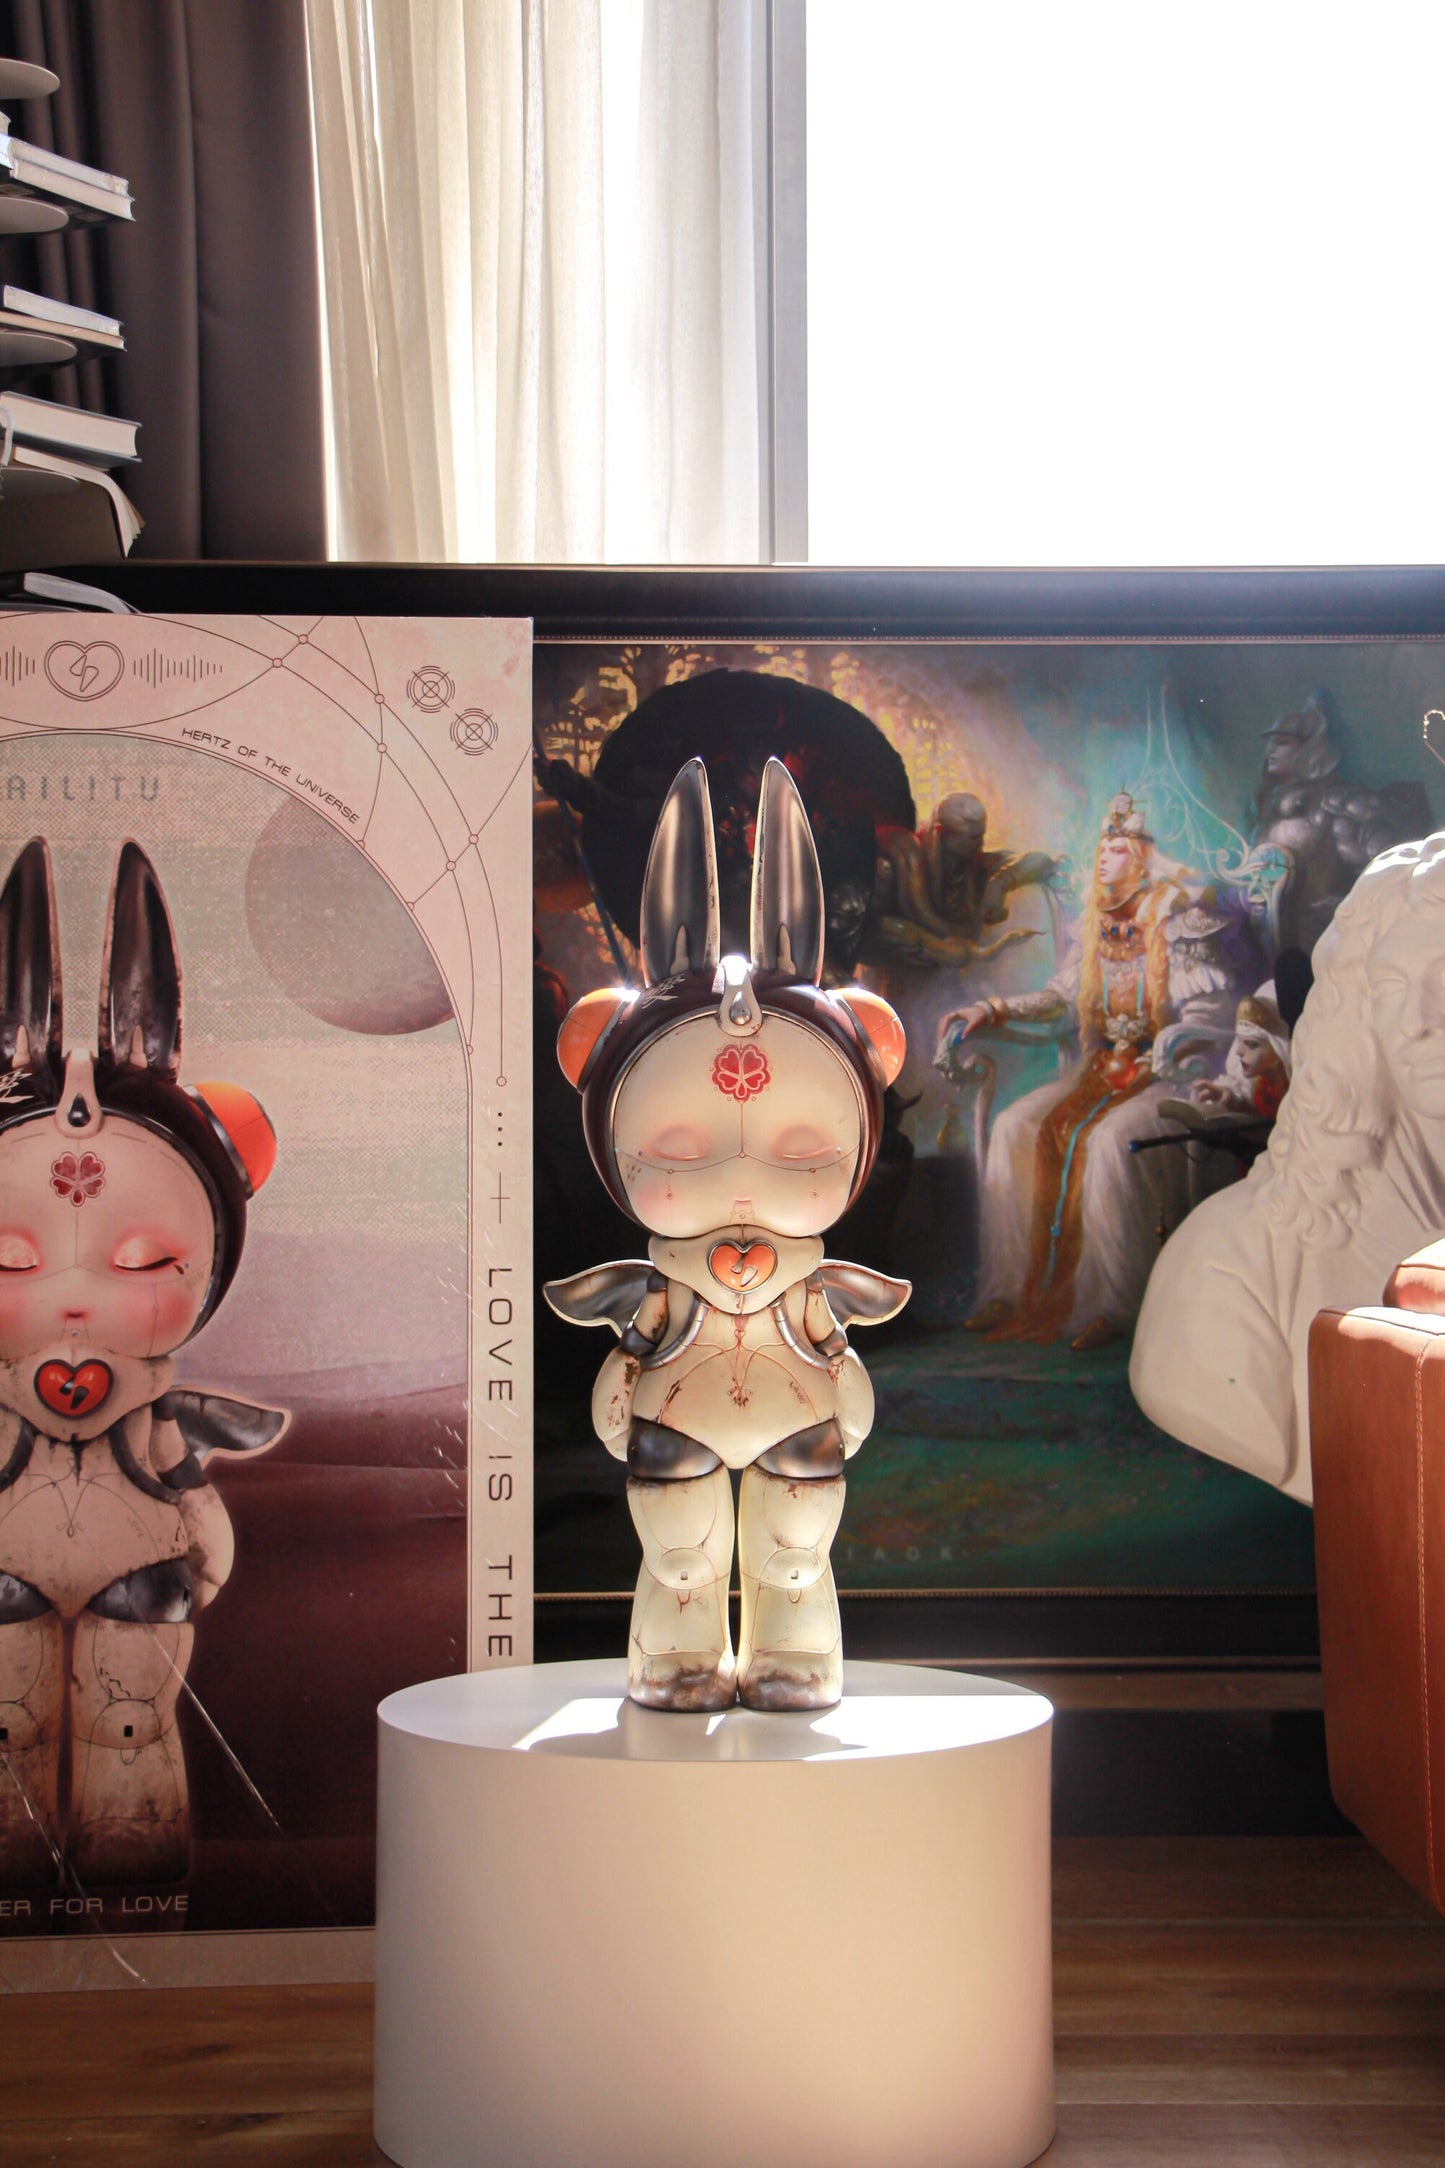 Art Toy Figure/Designer Toy/AILITU - Time Traveler/Material Polyurethane/Chinese Lacquer/27.17'' (69 cm) X 11.42'' (29 cm) X 9.06'' (23 cm)